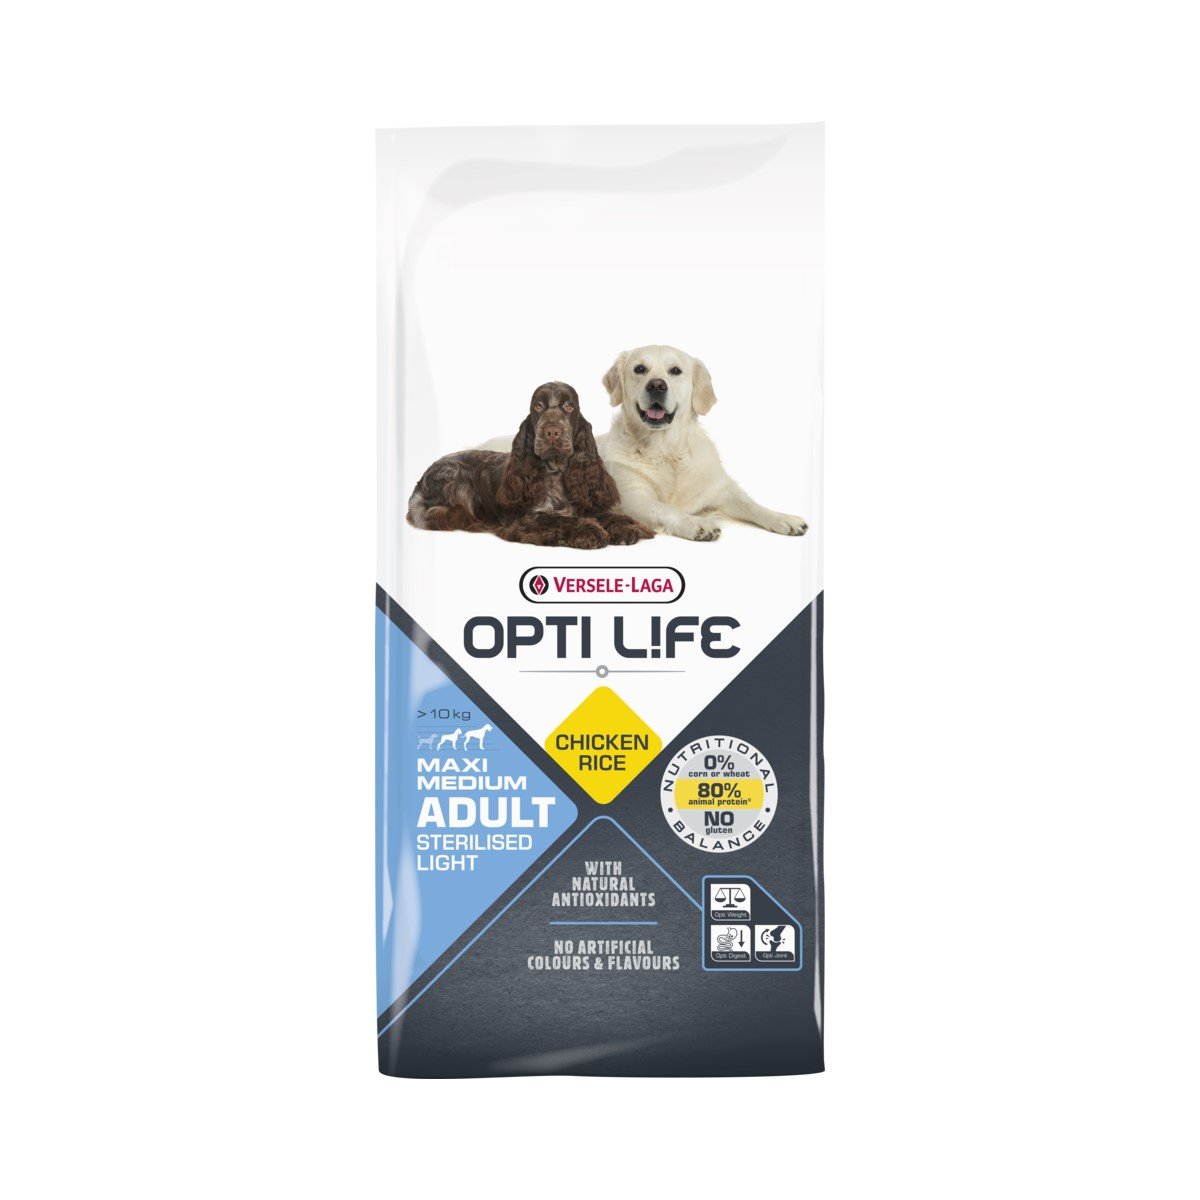 OPTI LIFE Maxi & Medium Light met kip